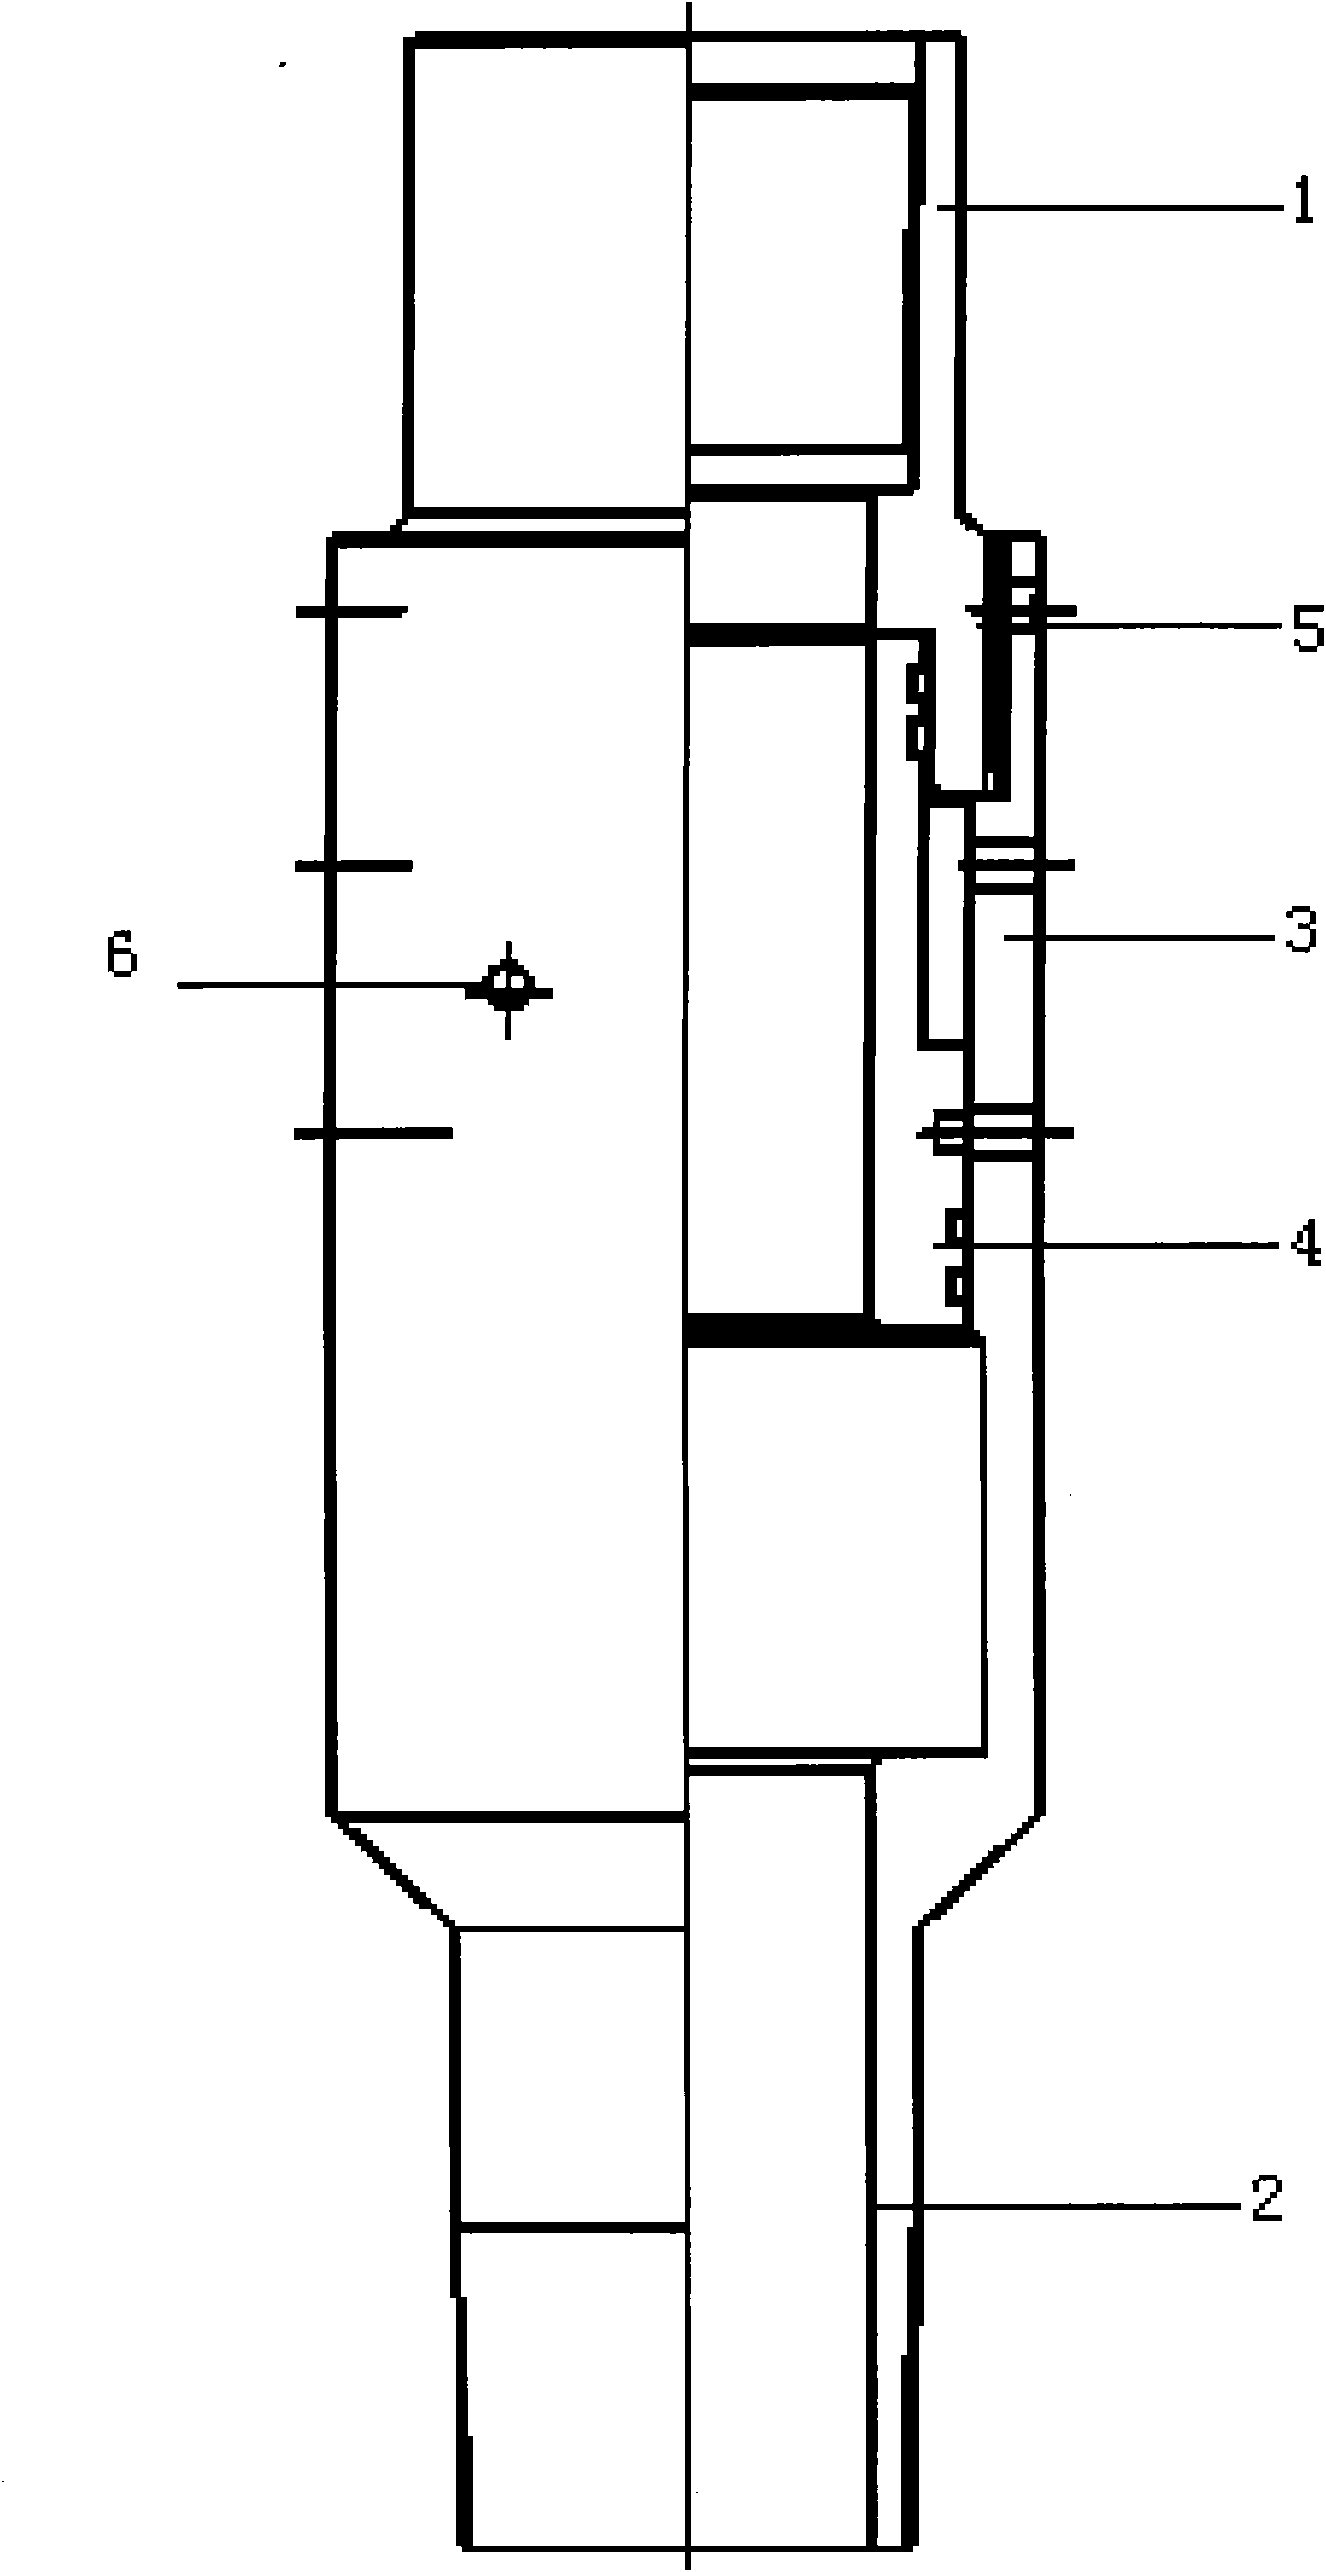 External differential pressure opening circulating valve